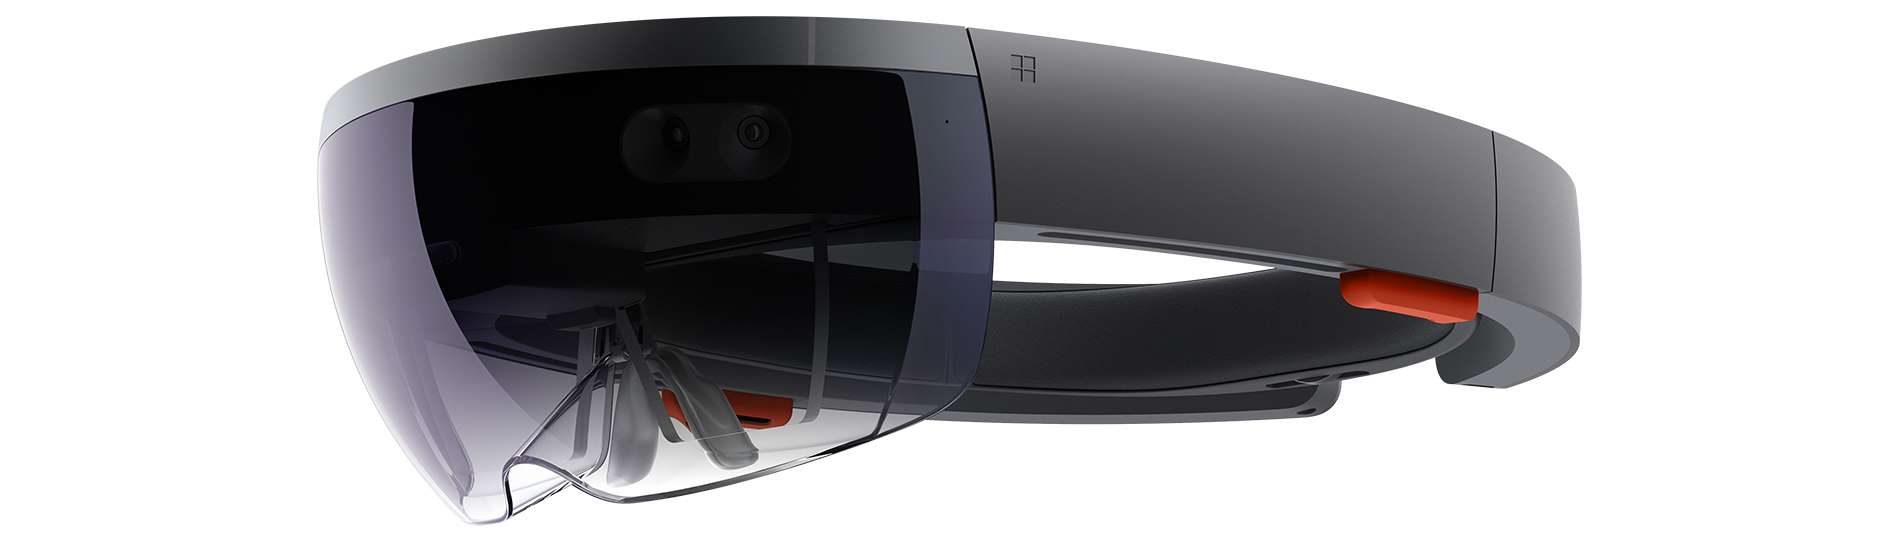 Microsoft HoloLens Virtual Reality Headset